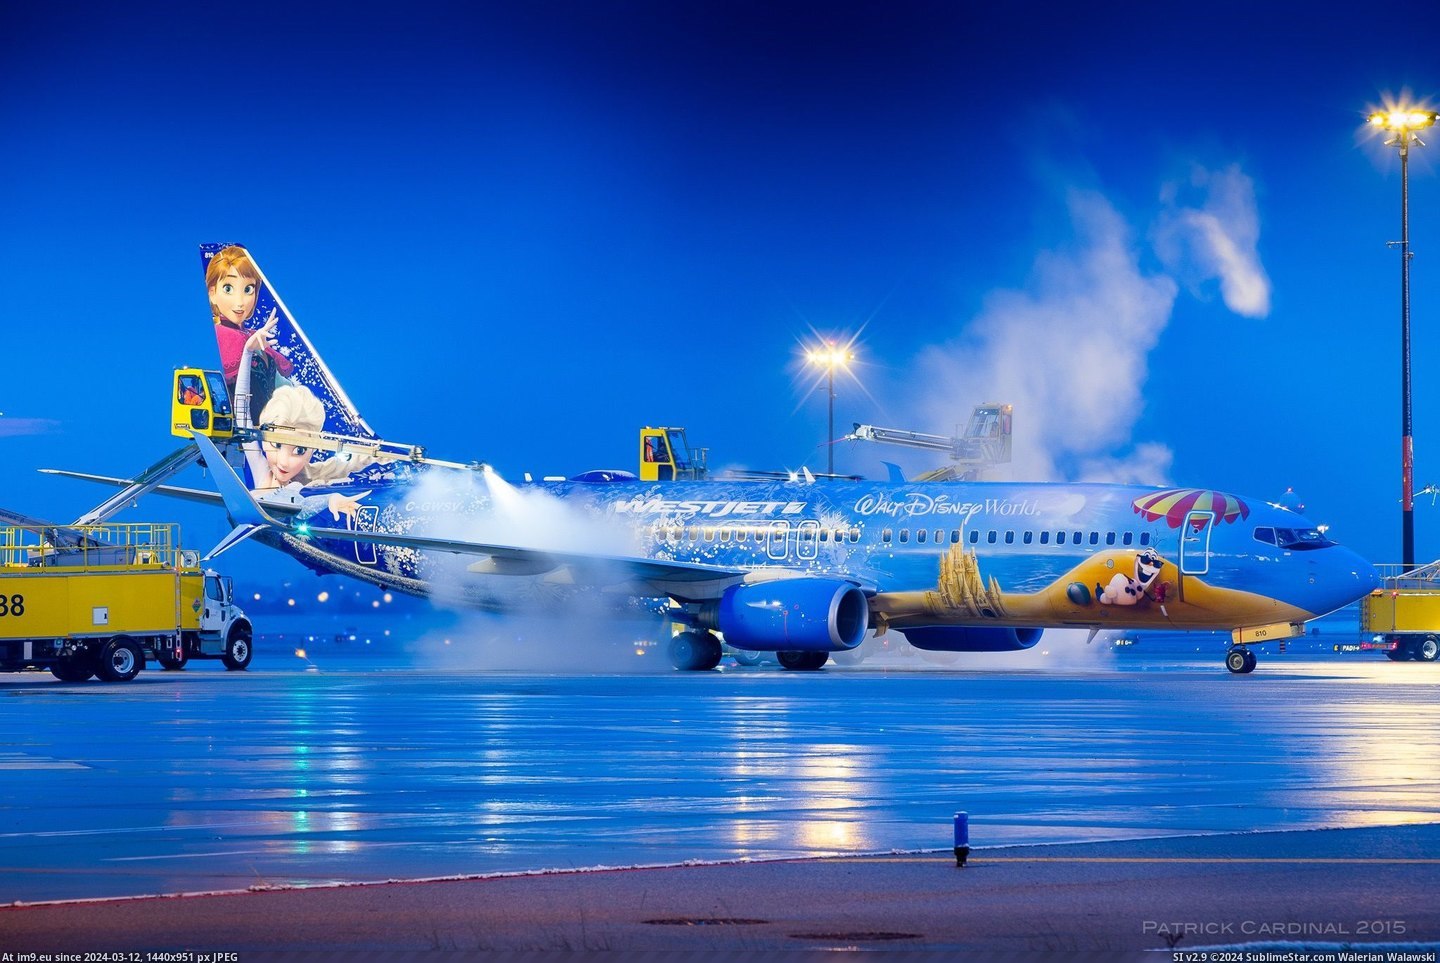 #Frozen #Airport #Crews #Plane #Ground [Pics] Airport ground crews de-icing a Frozen plane Pic. (Bild von album My r/PICS favs))